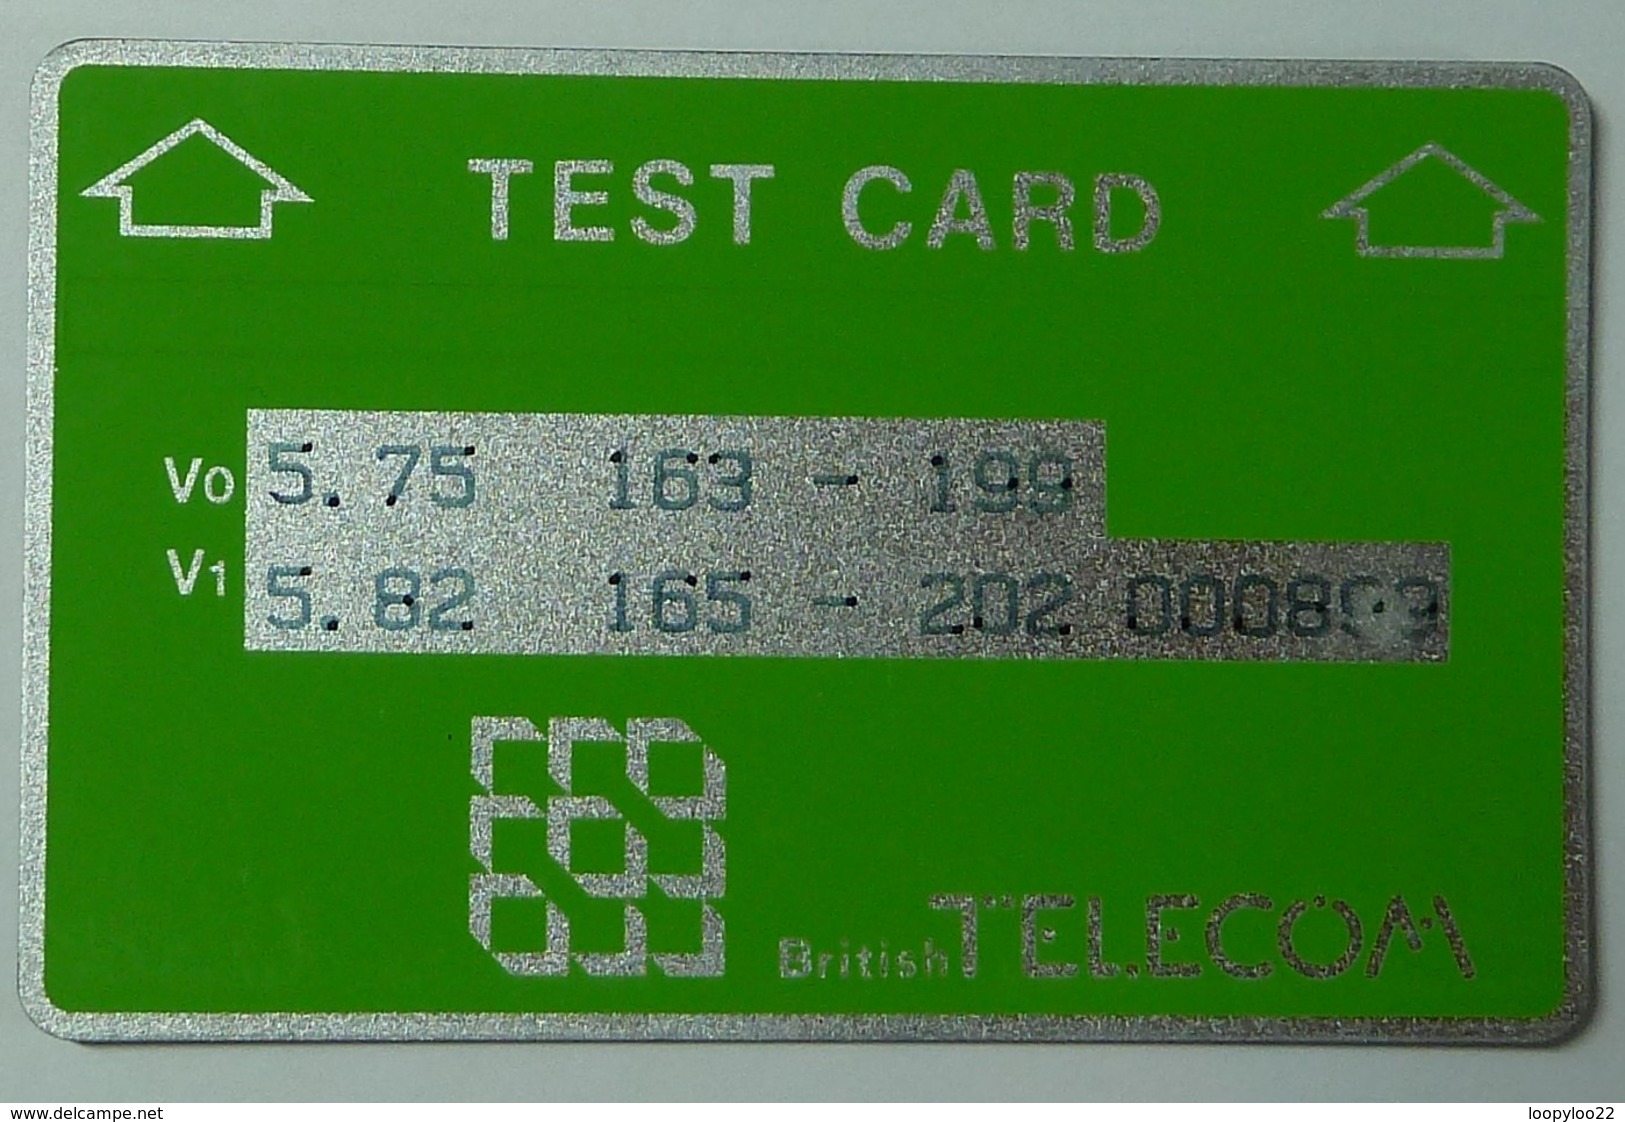 UK - Great Britain - L&G - BTT002 - Matt Finish - Green Test - 000899 - Mint - RR - BT Engineer BSK Service Test Issues